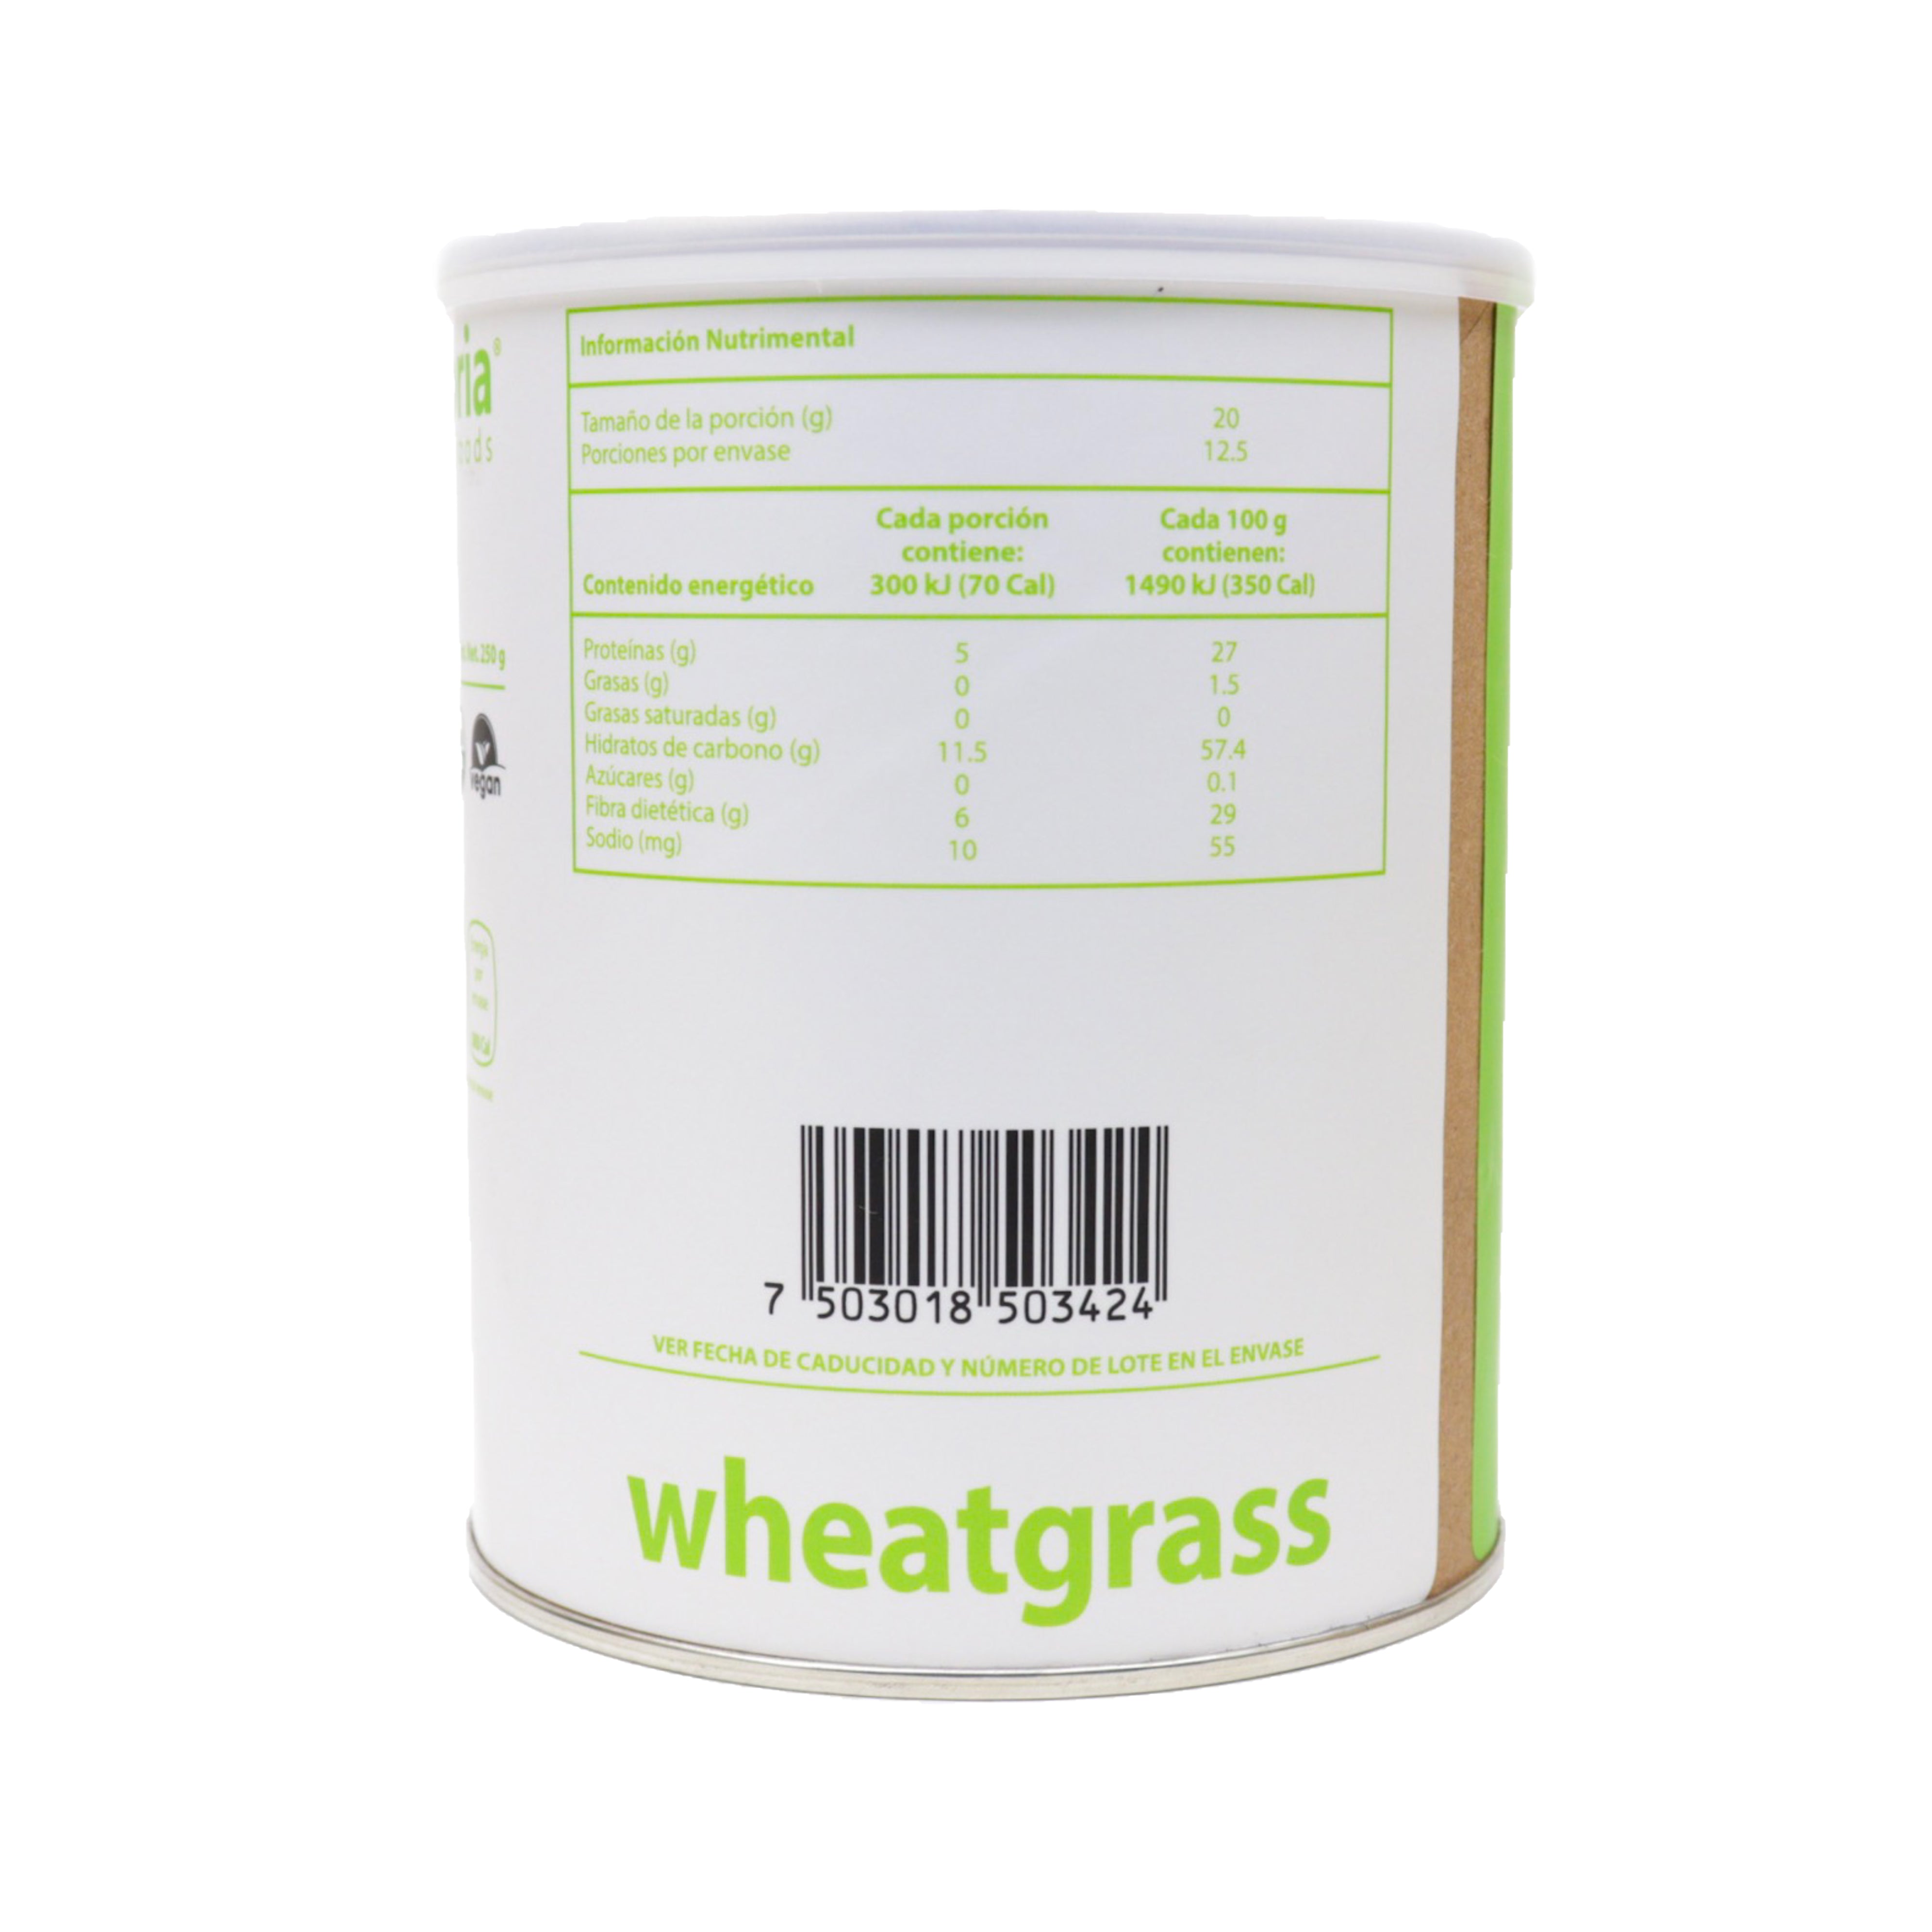 Euphoria Superfoods Wheatgrass orgánico 250 g